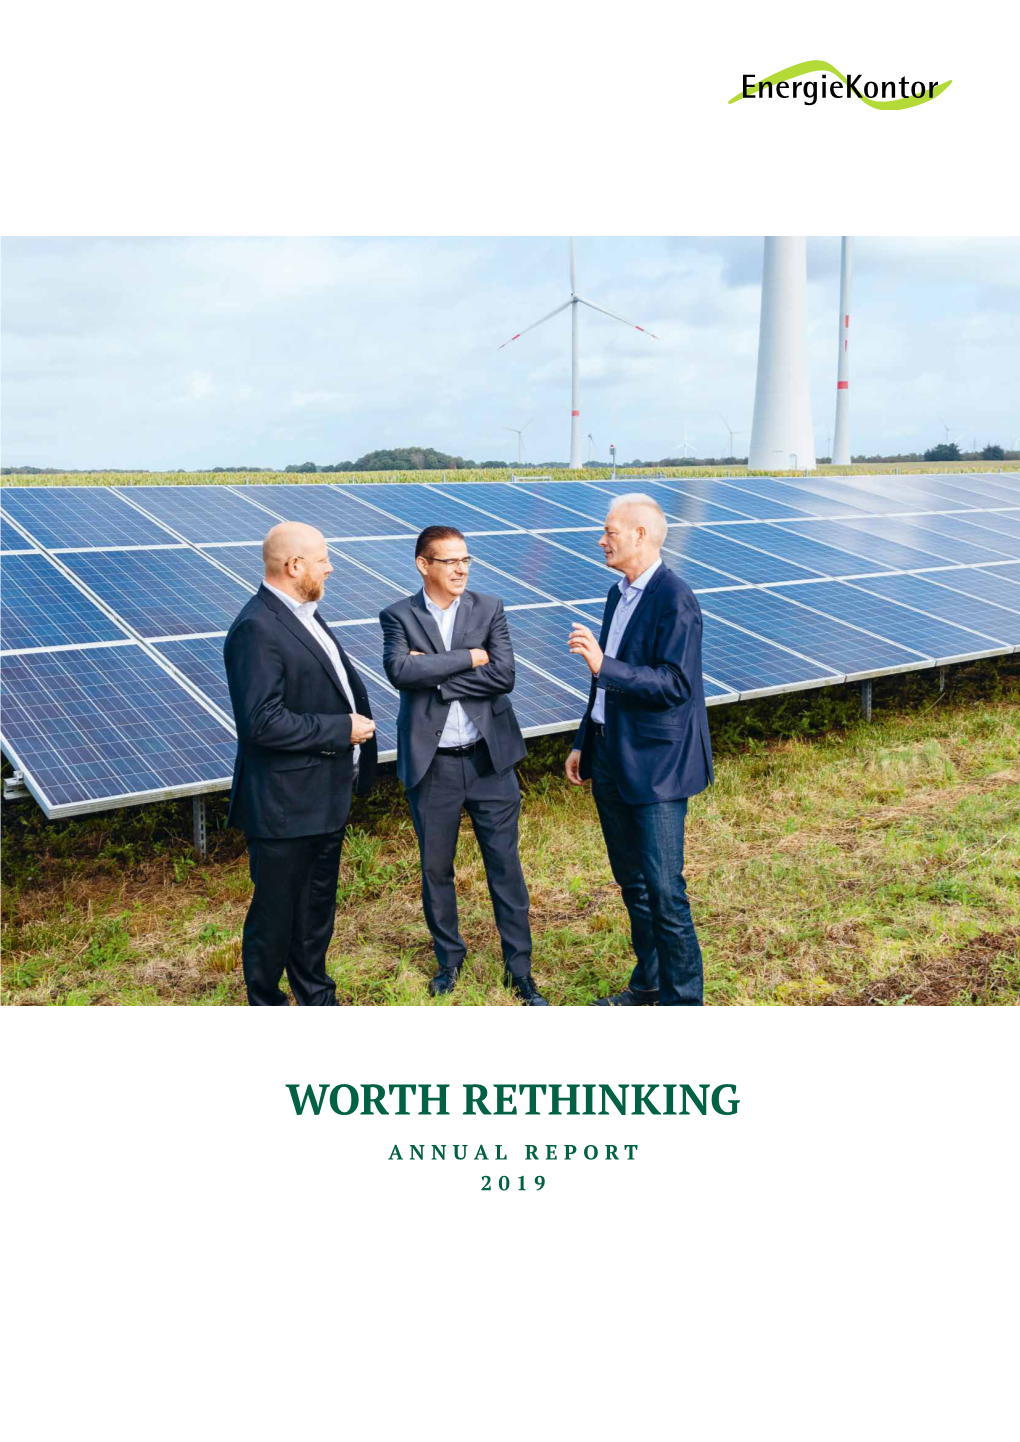 WORTH RETHINKING ANNUAL REPORT 2019 Brief Portrait of Energiekontor AG